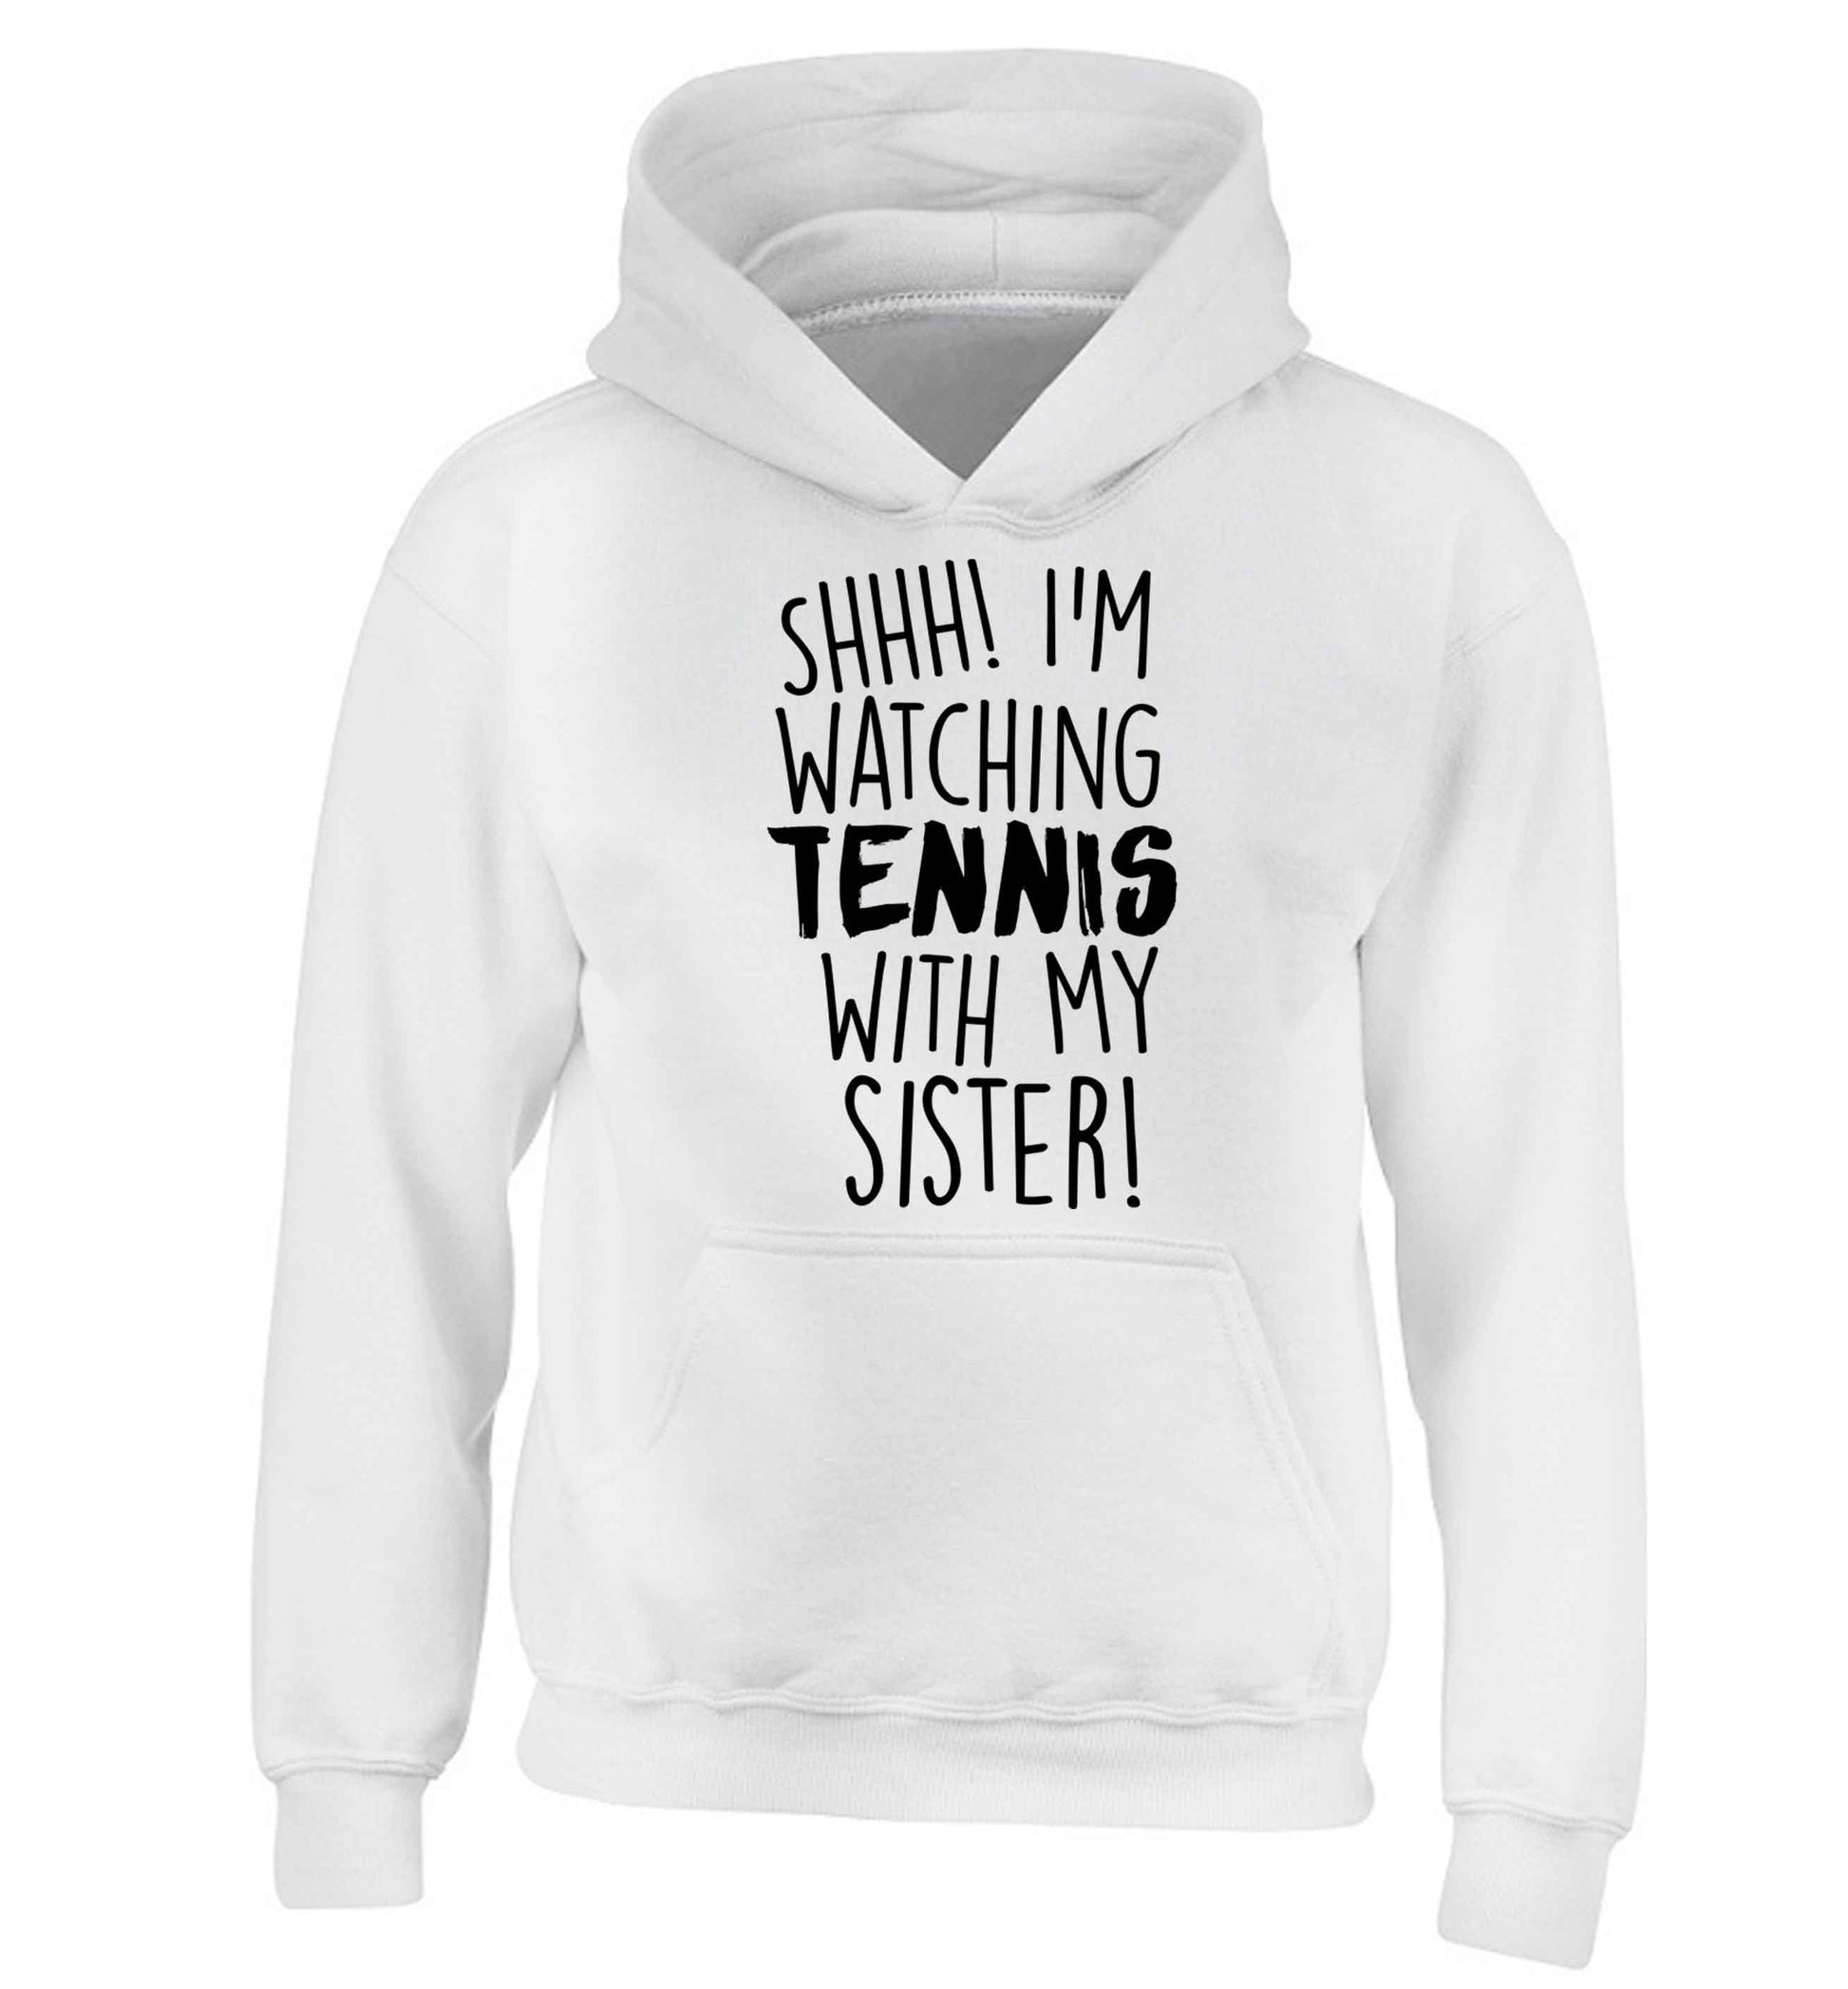 Shh! I'm watching tennis with my sister! children's white hoodie 12-13 Years